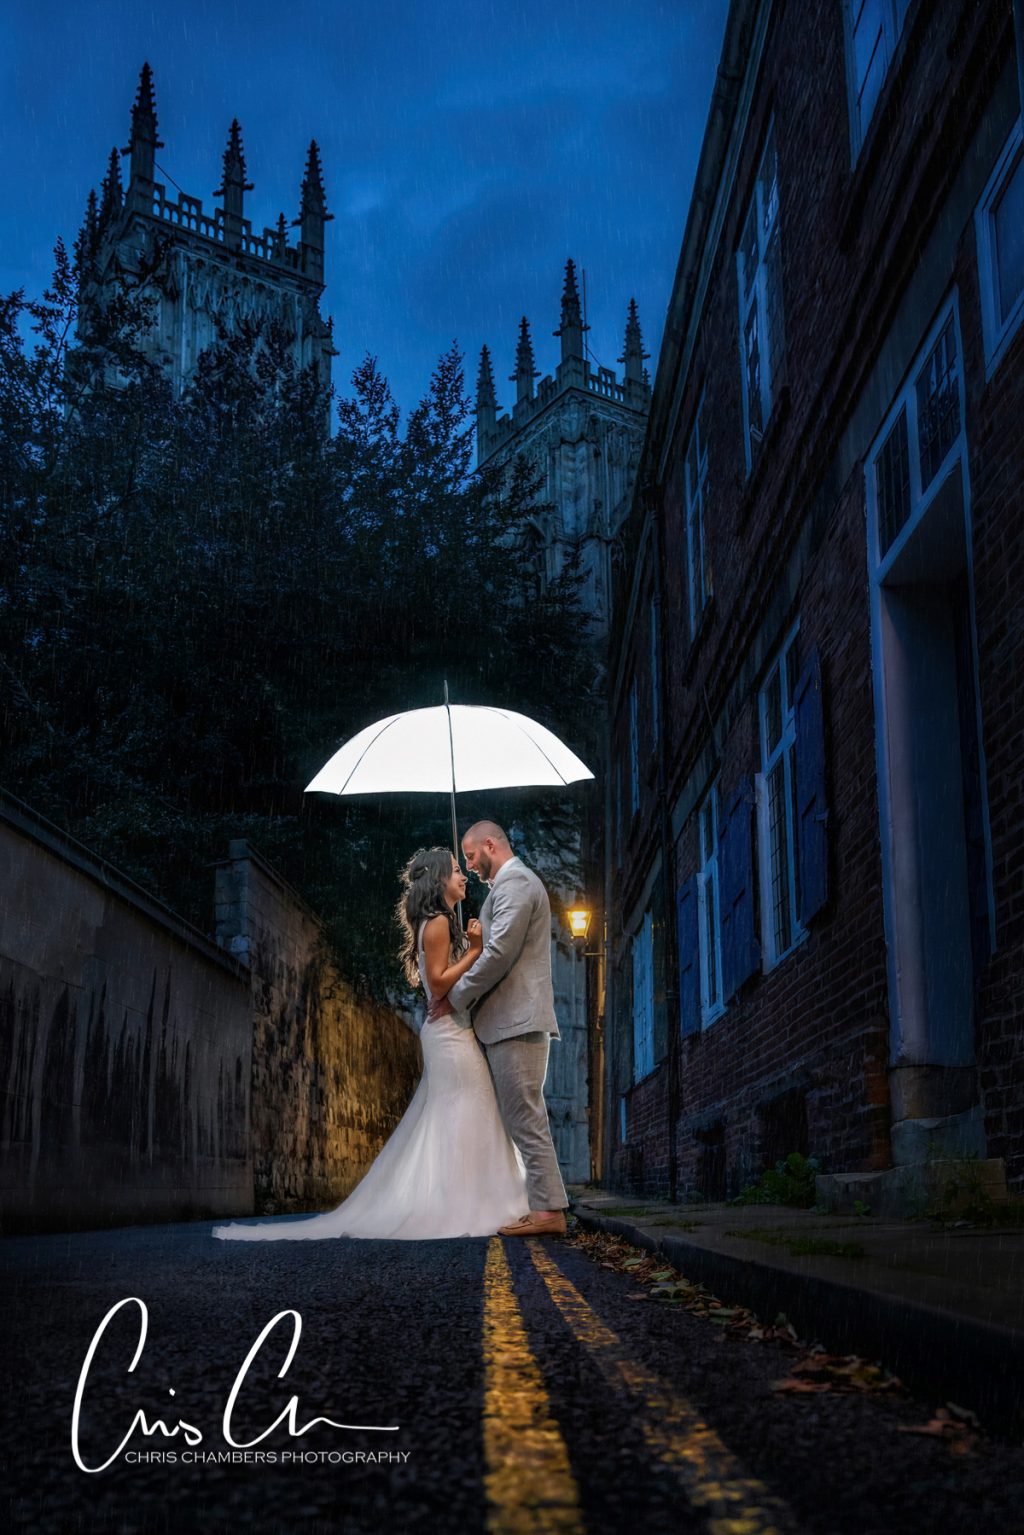 Award winning wedding photograph in York